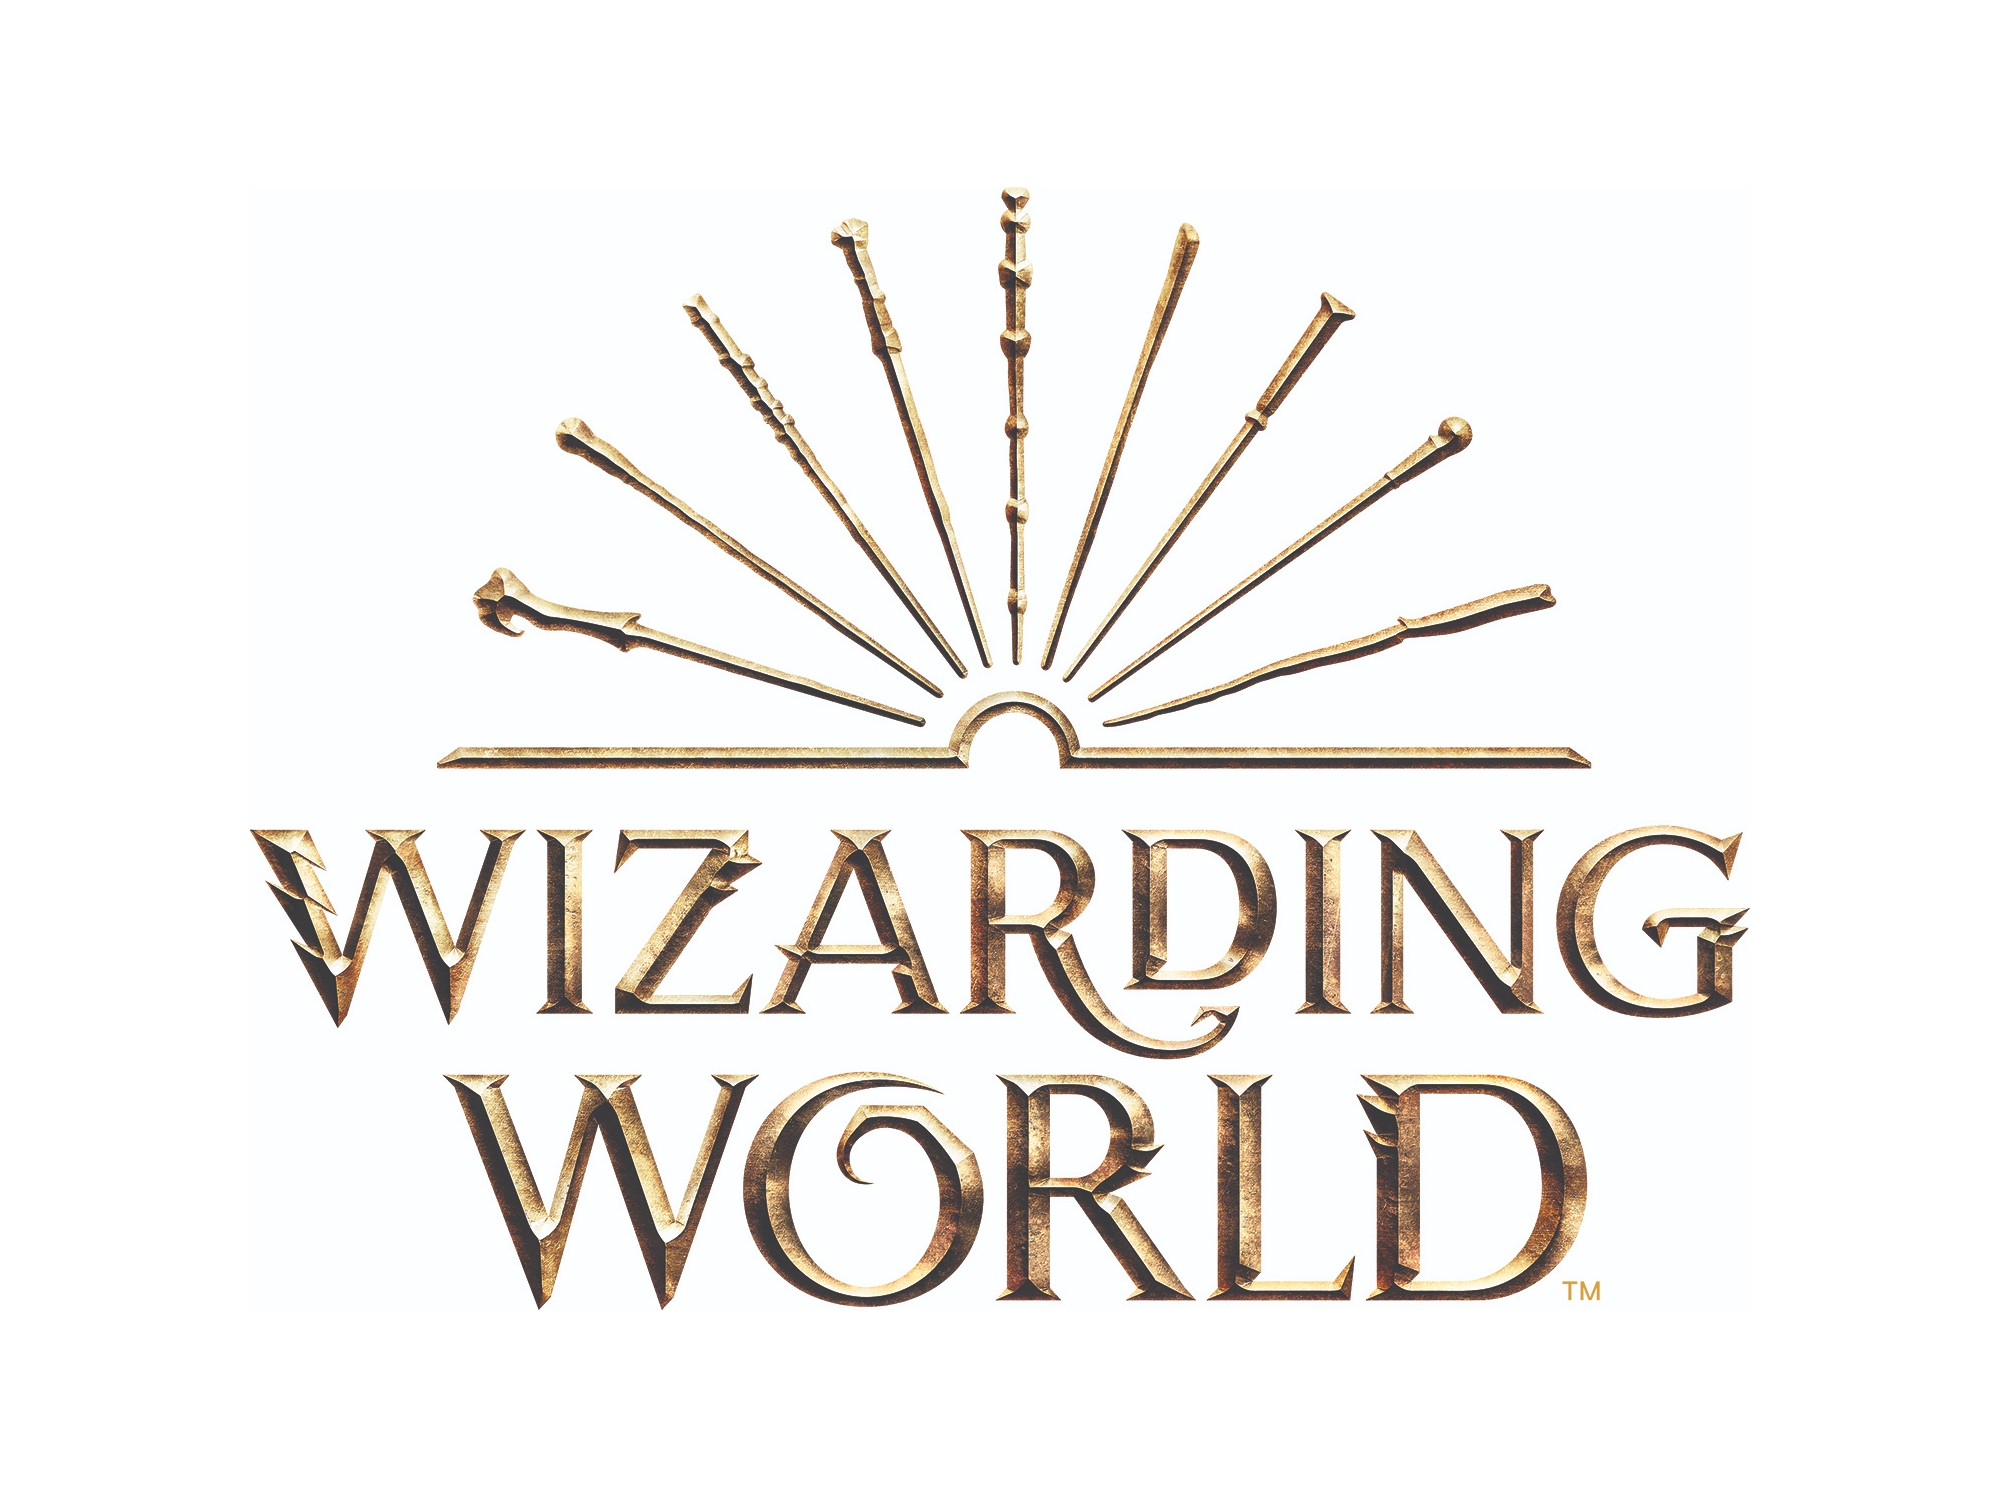 Wizarding World of Harry Potter - Haul of Harry Potter goo…